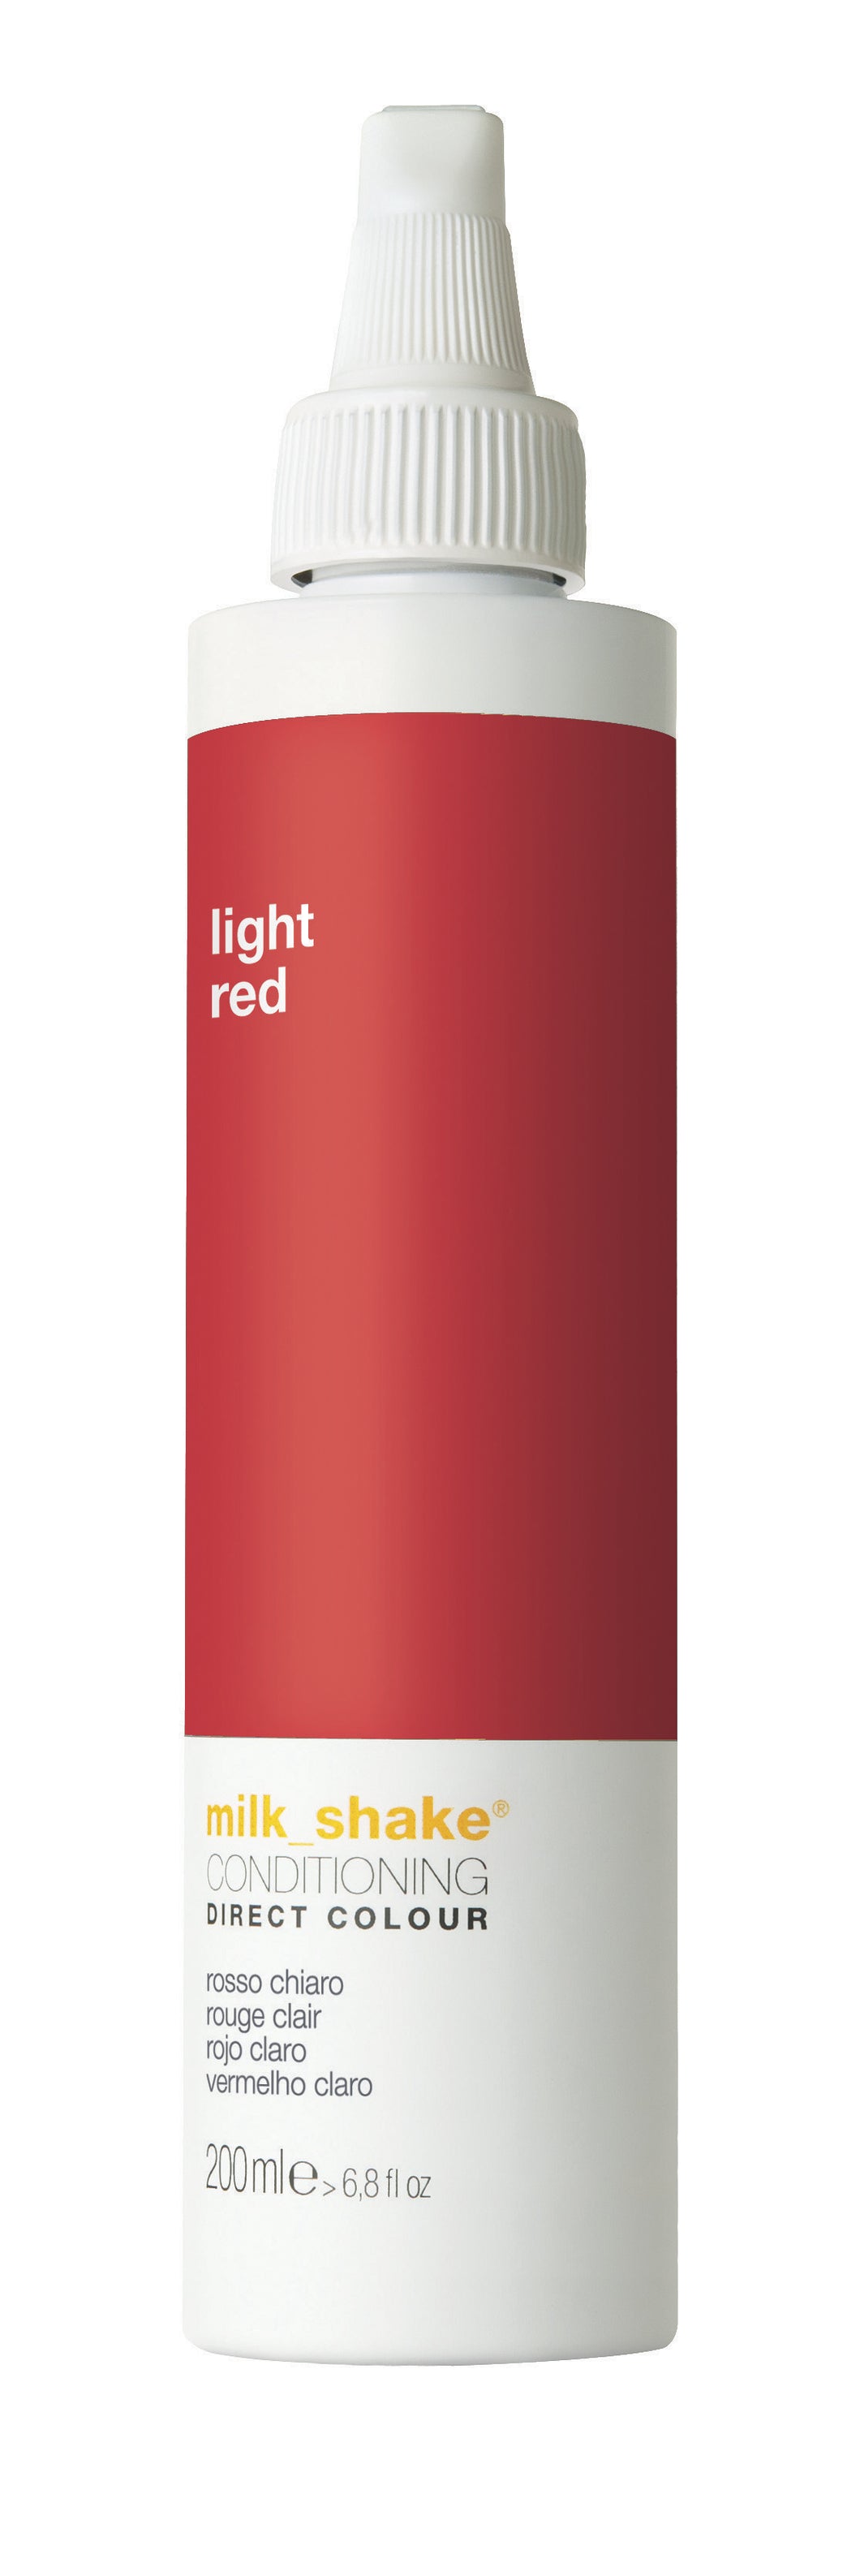 milk_shake direct colour light red-0